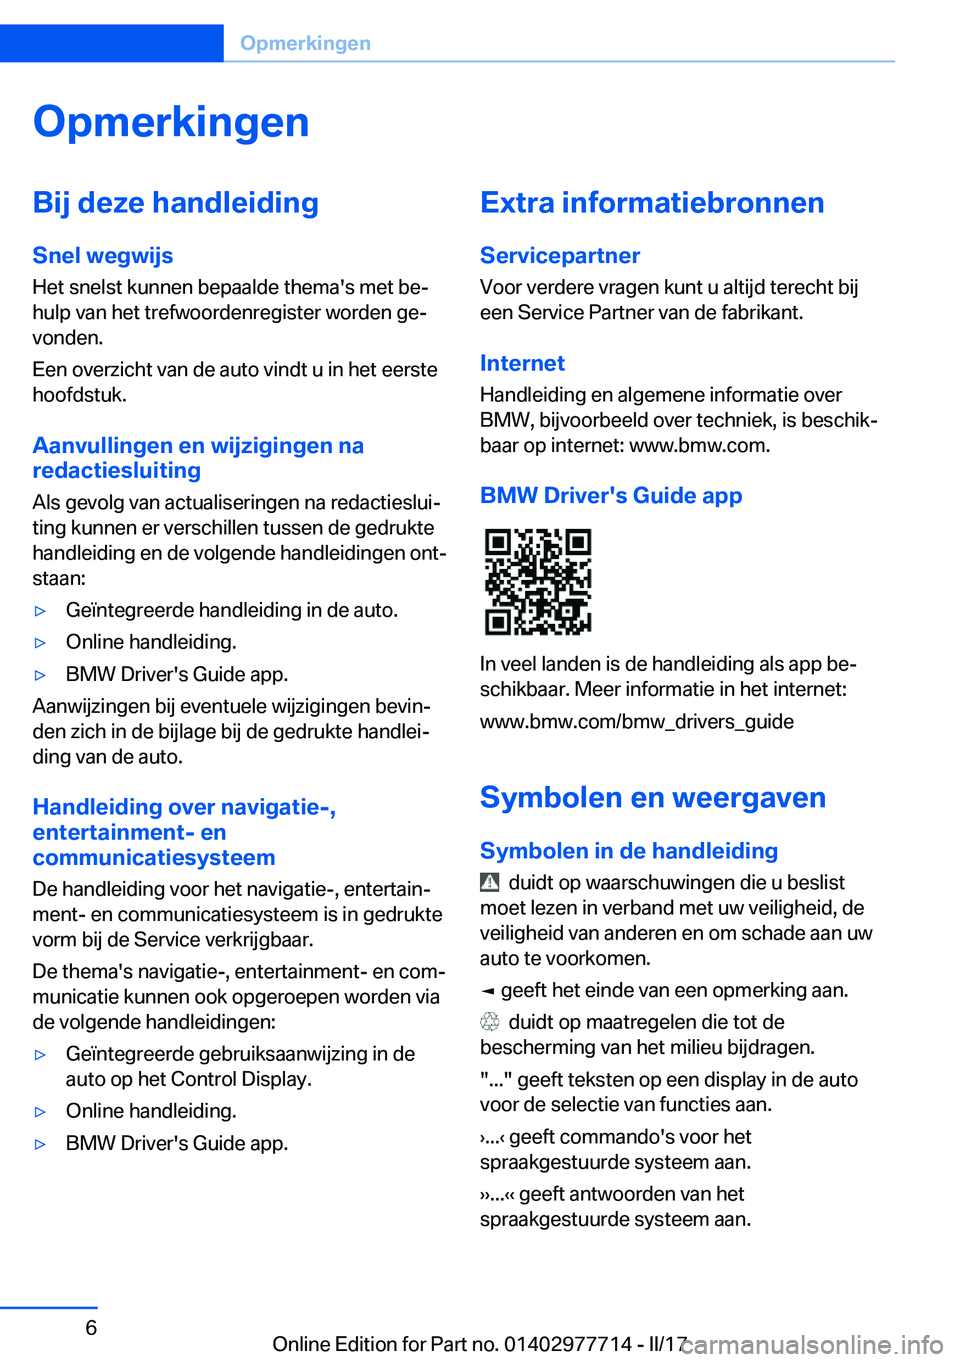 BMW 2 SERIES COUPE 2017  Instructieboekjes (in Dutch) �O�p�m�e�r�k�i�n�g�e�n�B�i�j��d�e�z�e��h�a�n�d�l�e�i�d�i�n�g�S�n�e�l��w�e�g�w�i�j�s
�H�e�t� �s�n�e�l�s�t� �k�u�n�n�e�n� �b�e�p�a�a�l�d�e� �t�h�e�m�a�'�s� �m�e�t� �b�ej
�h�u�l�p� �v�a�n� �h�e�t